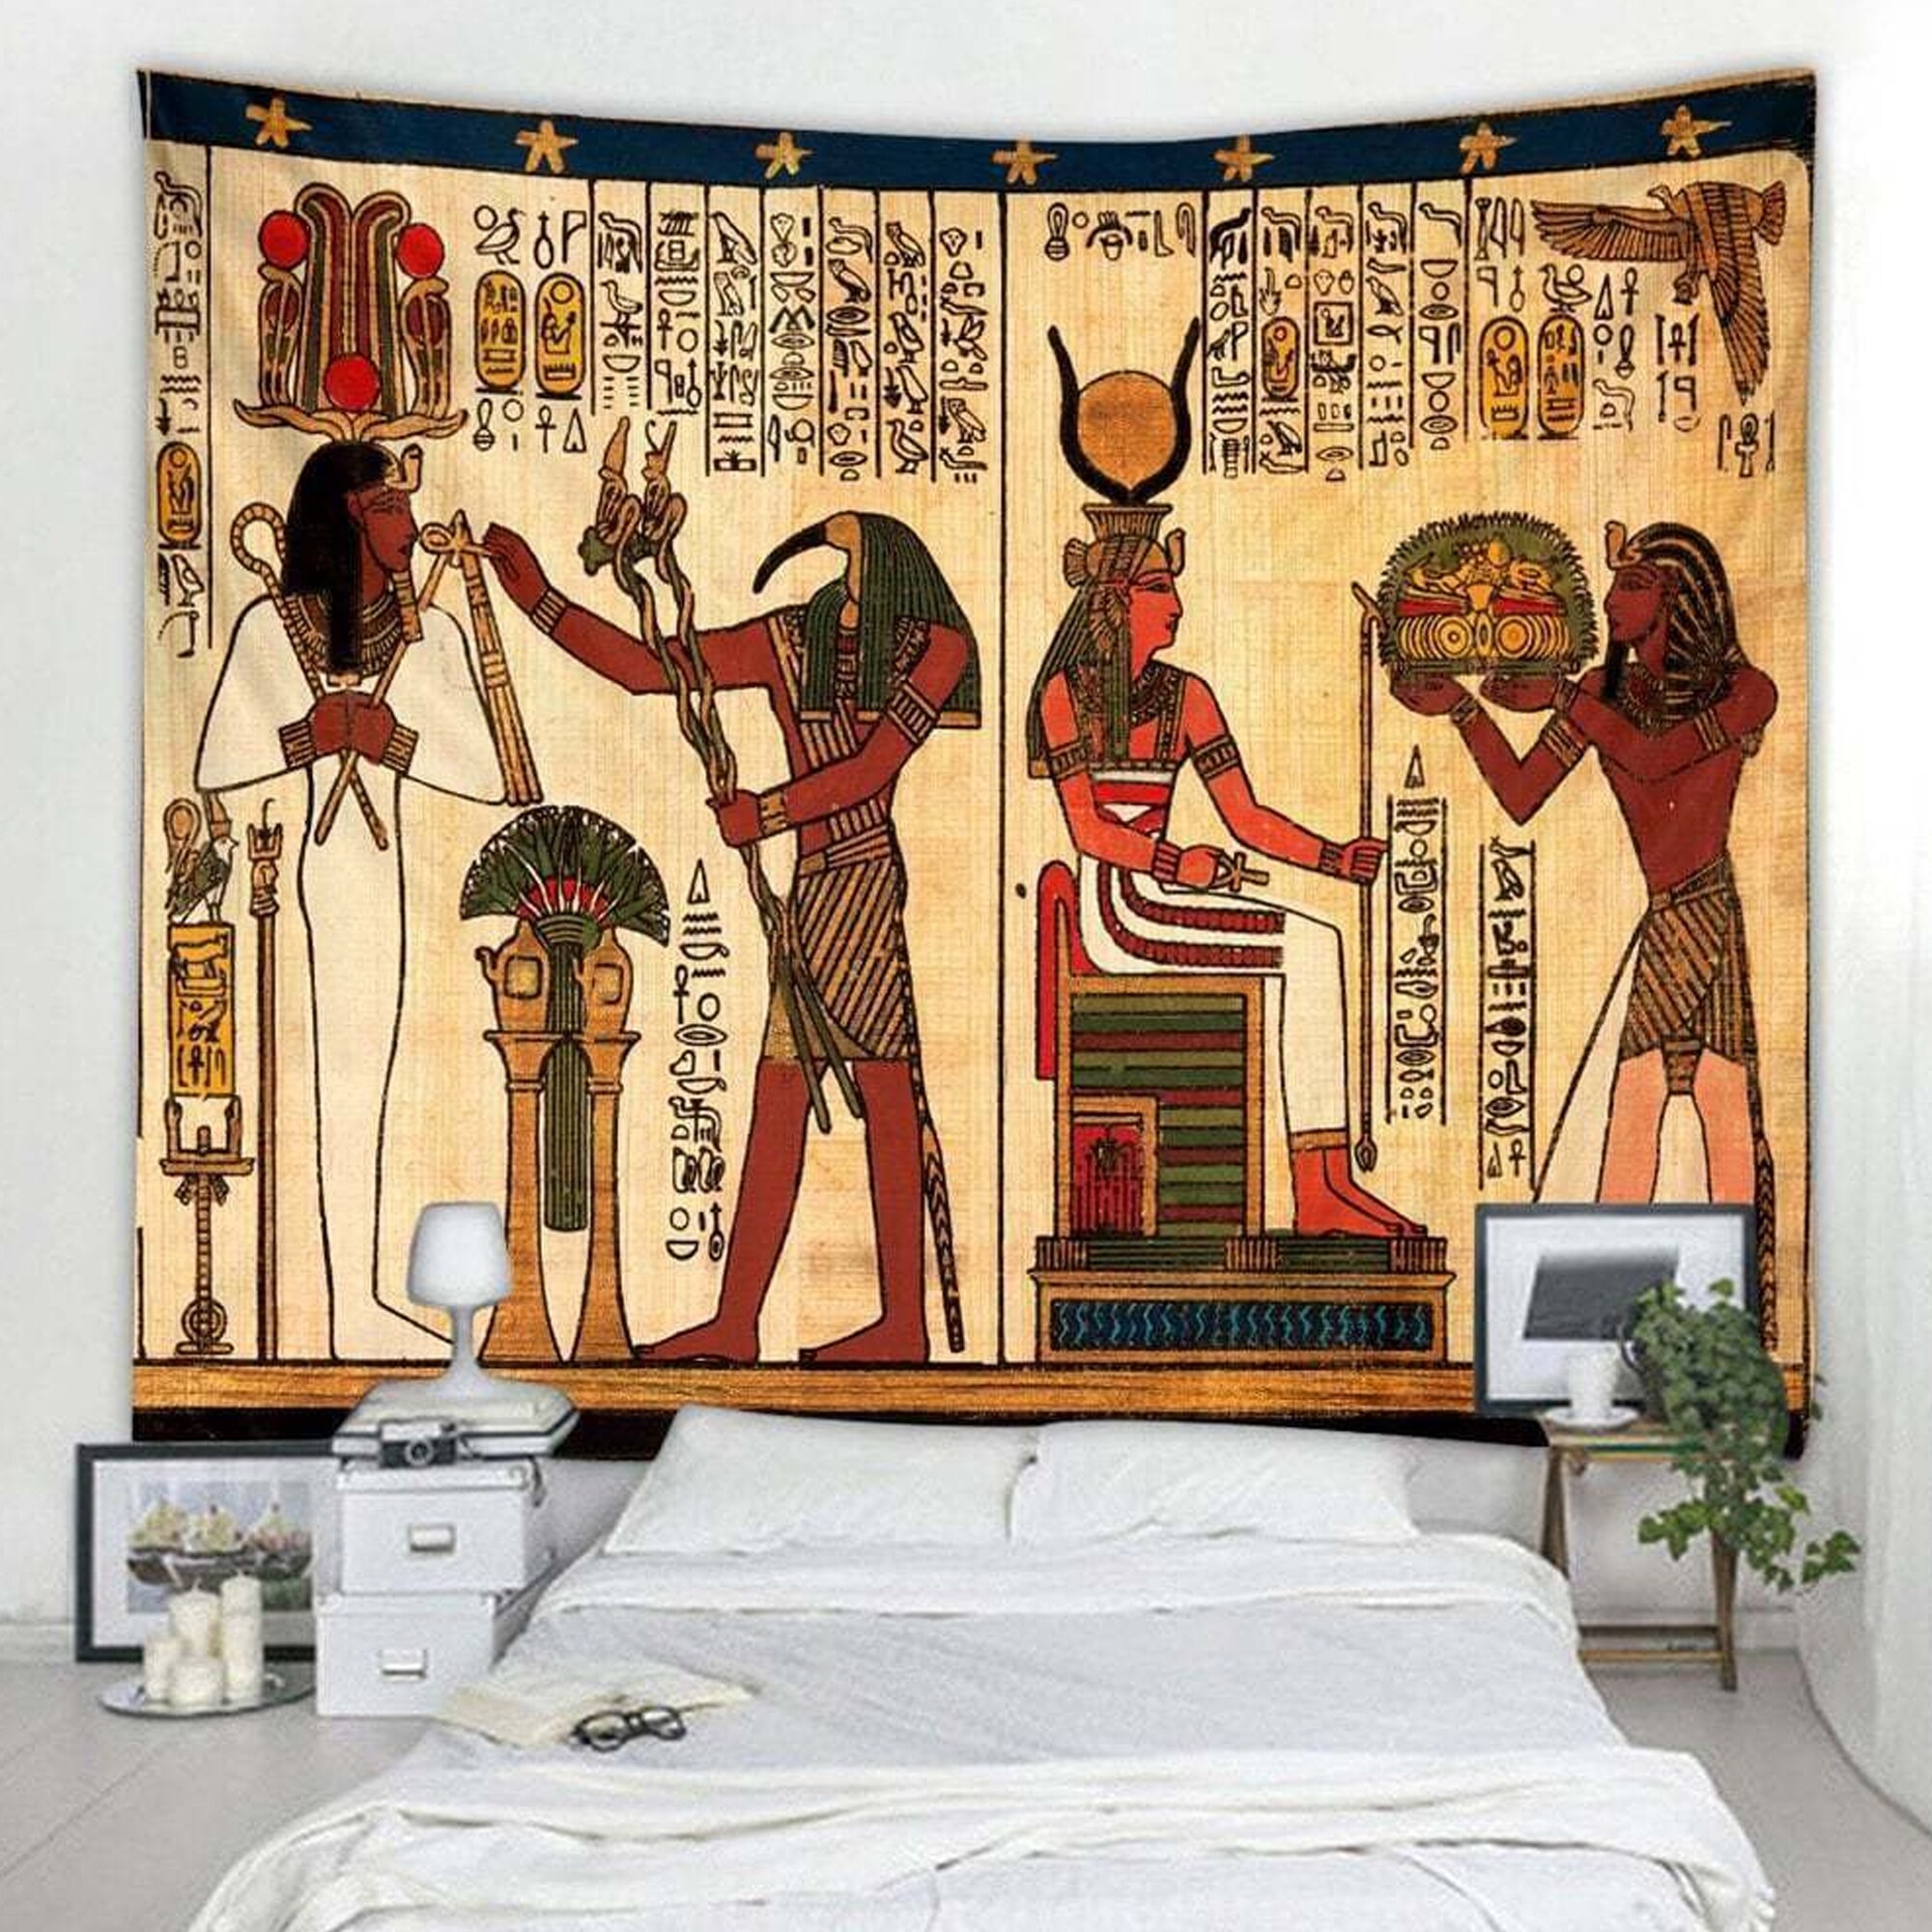 Sun Egypt Desert Pyramid Tapestry Wall Hanging Living Room Bedroom Dorm Decor 